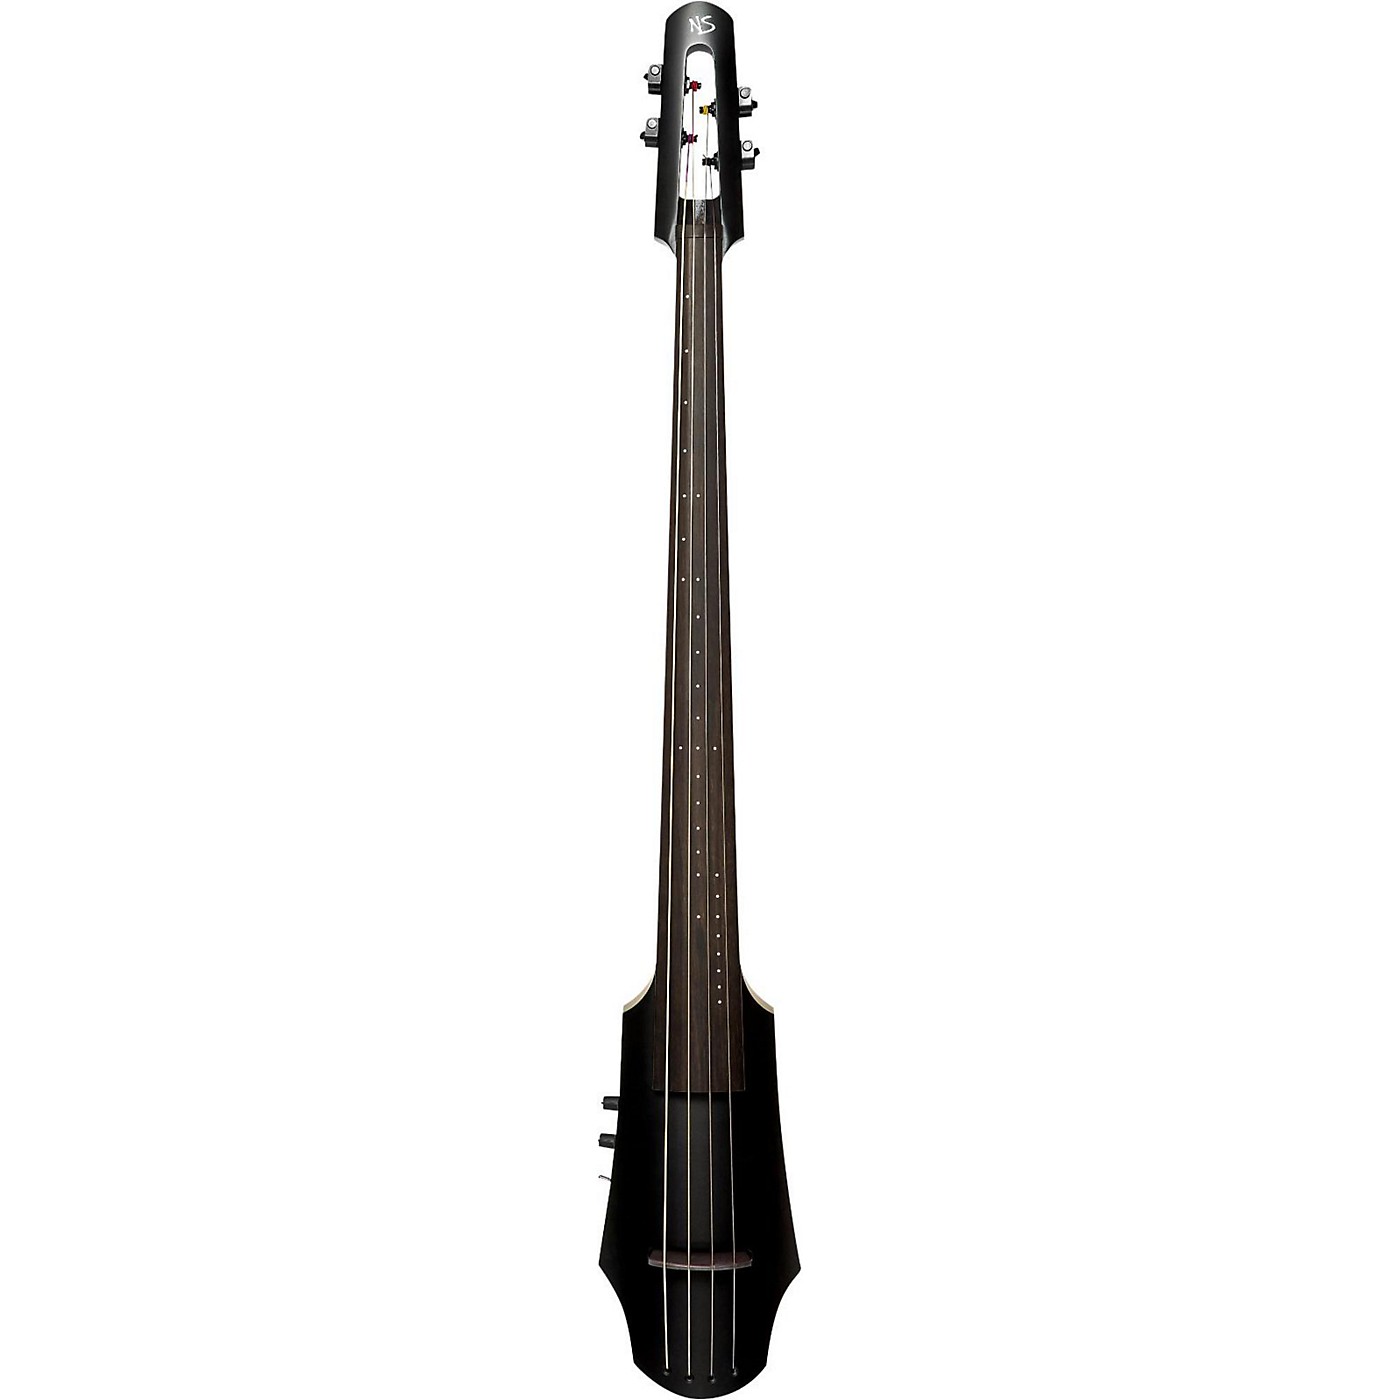 NS Design NXTa Active Series 4-String Electric Cello in Black thumbnail